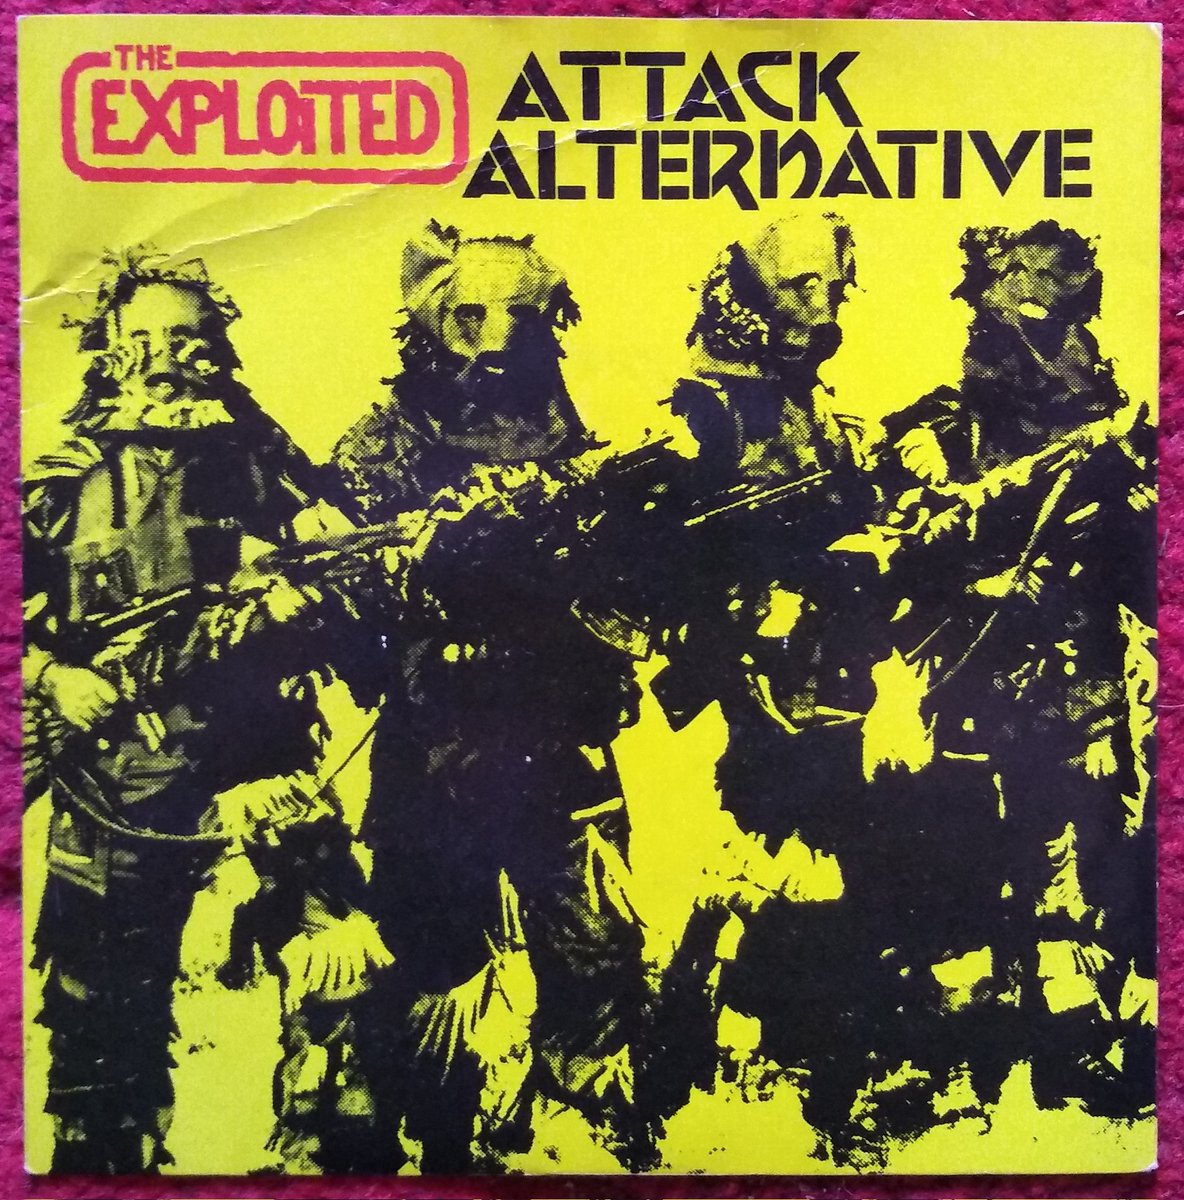 The Exploited 'Attack' B side 'Alternative' 7inch single, Secret Records 1982.  #TheExploitedband #TheExploitedvinyl #punkvinyl #punkmusic #recordcollection #vinylcollection #vinylcommunity